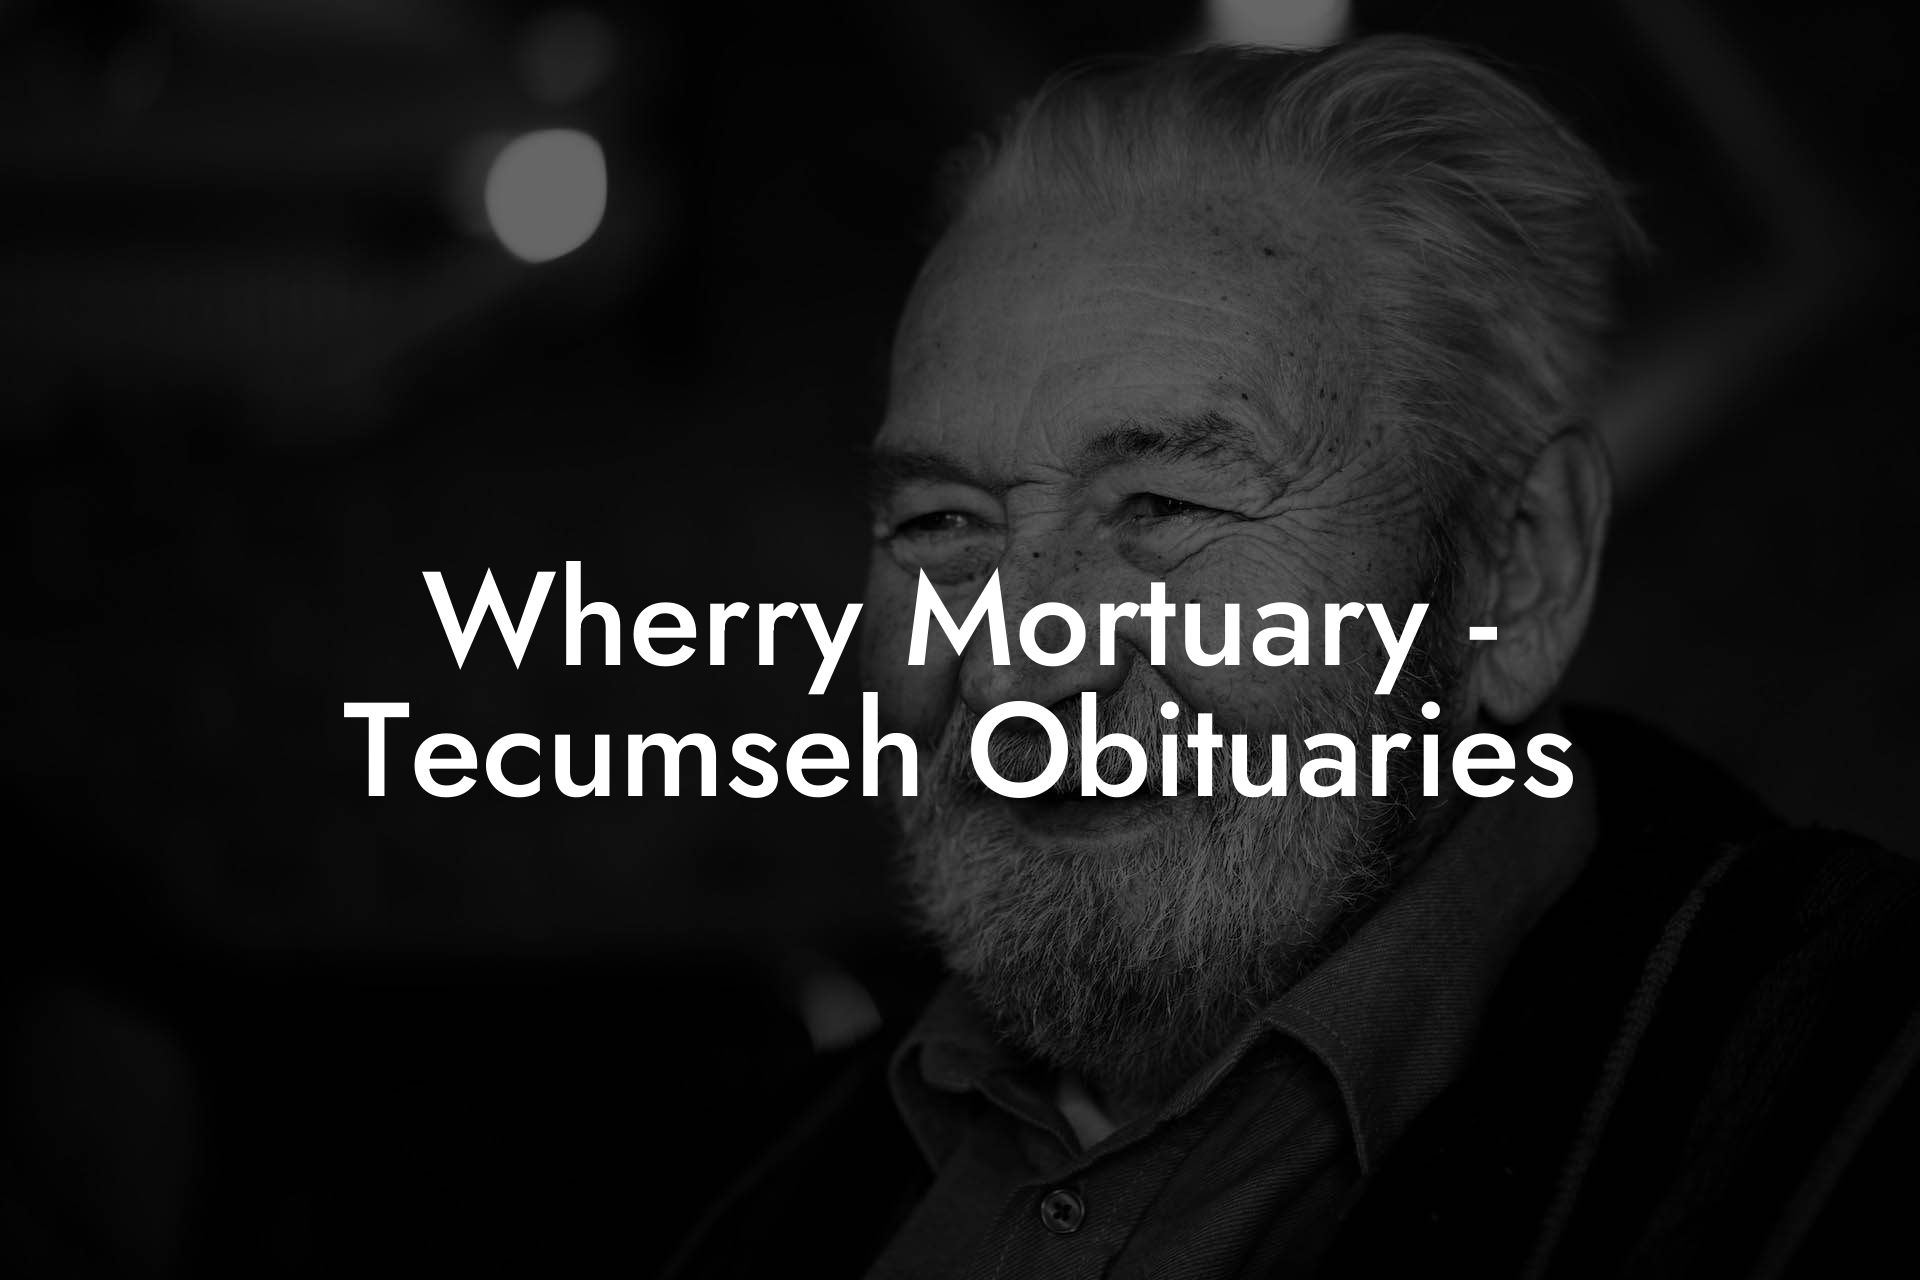 Wherry Mortuary - Tecumseh Obituaries